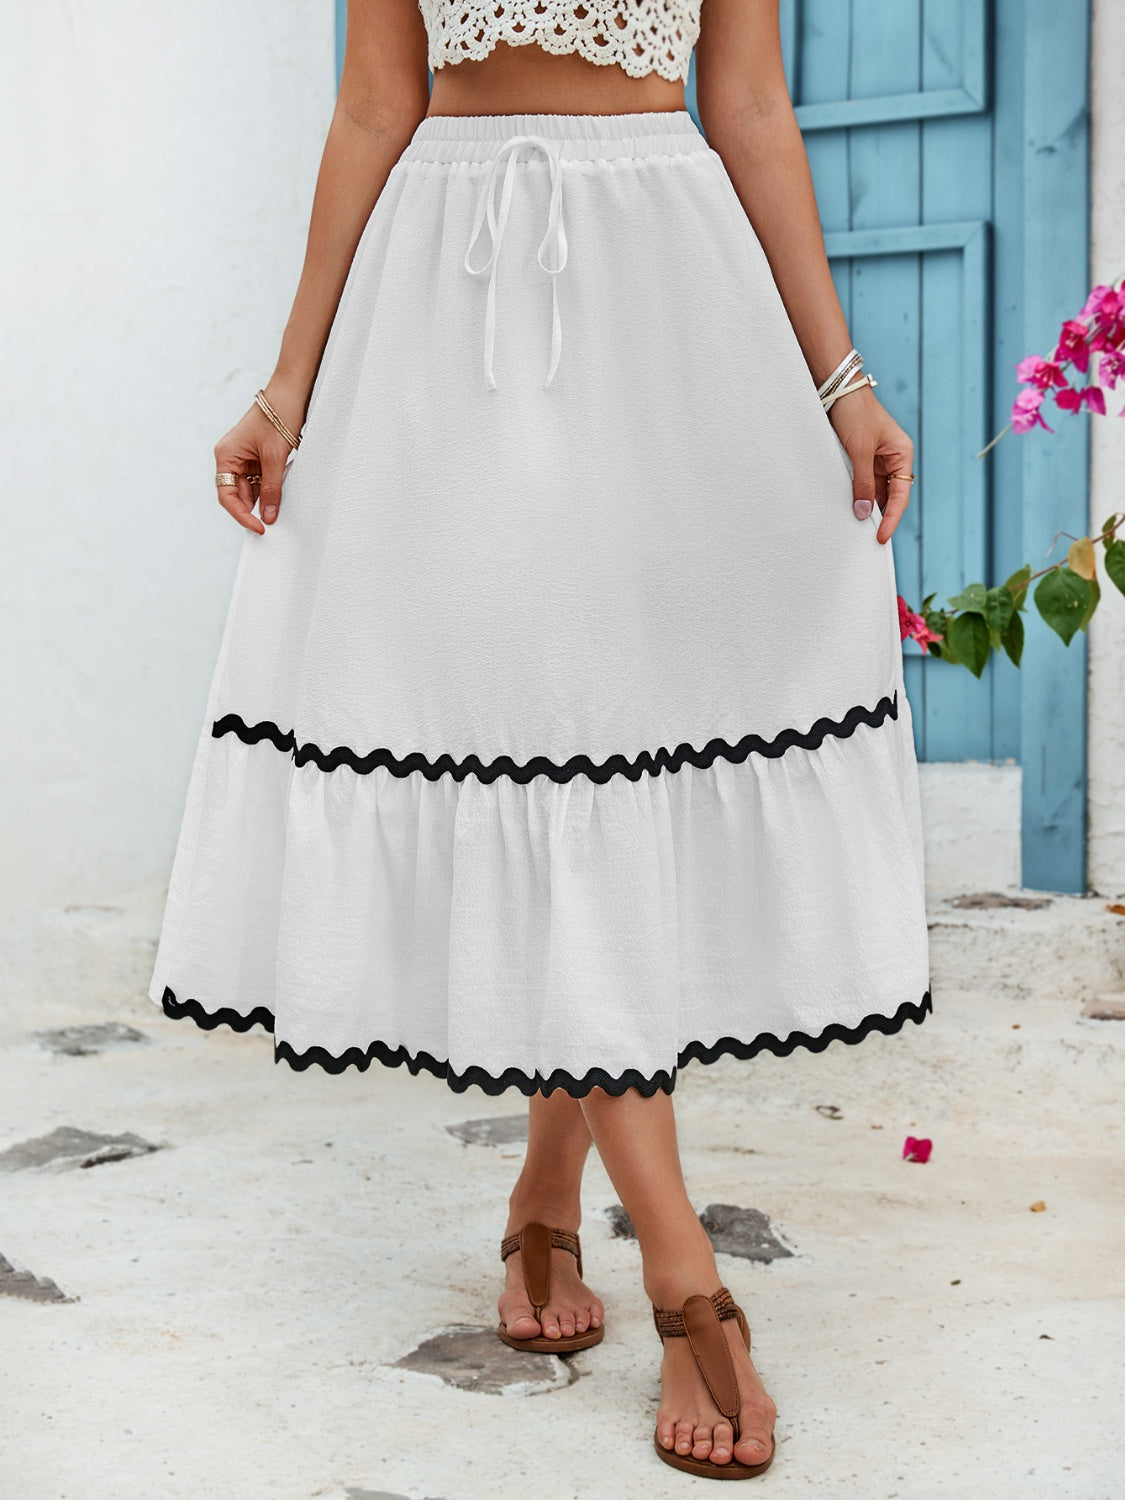 TEEK - White Tied Contrast Trim High Waist Skirt SKIRT TEEK Trend   